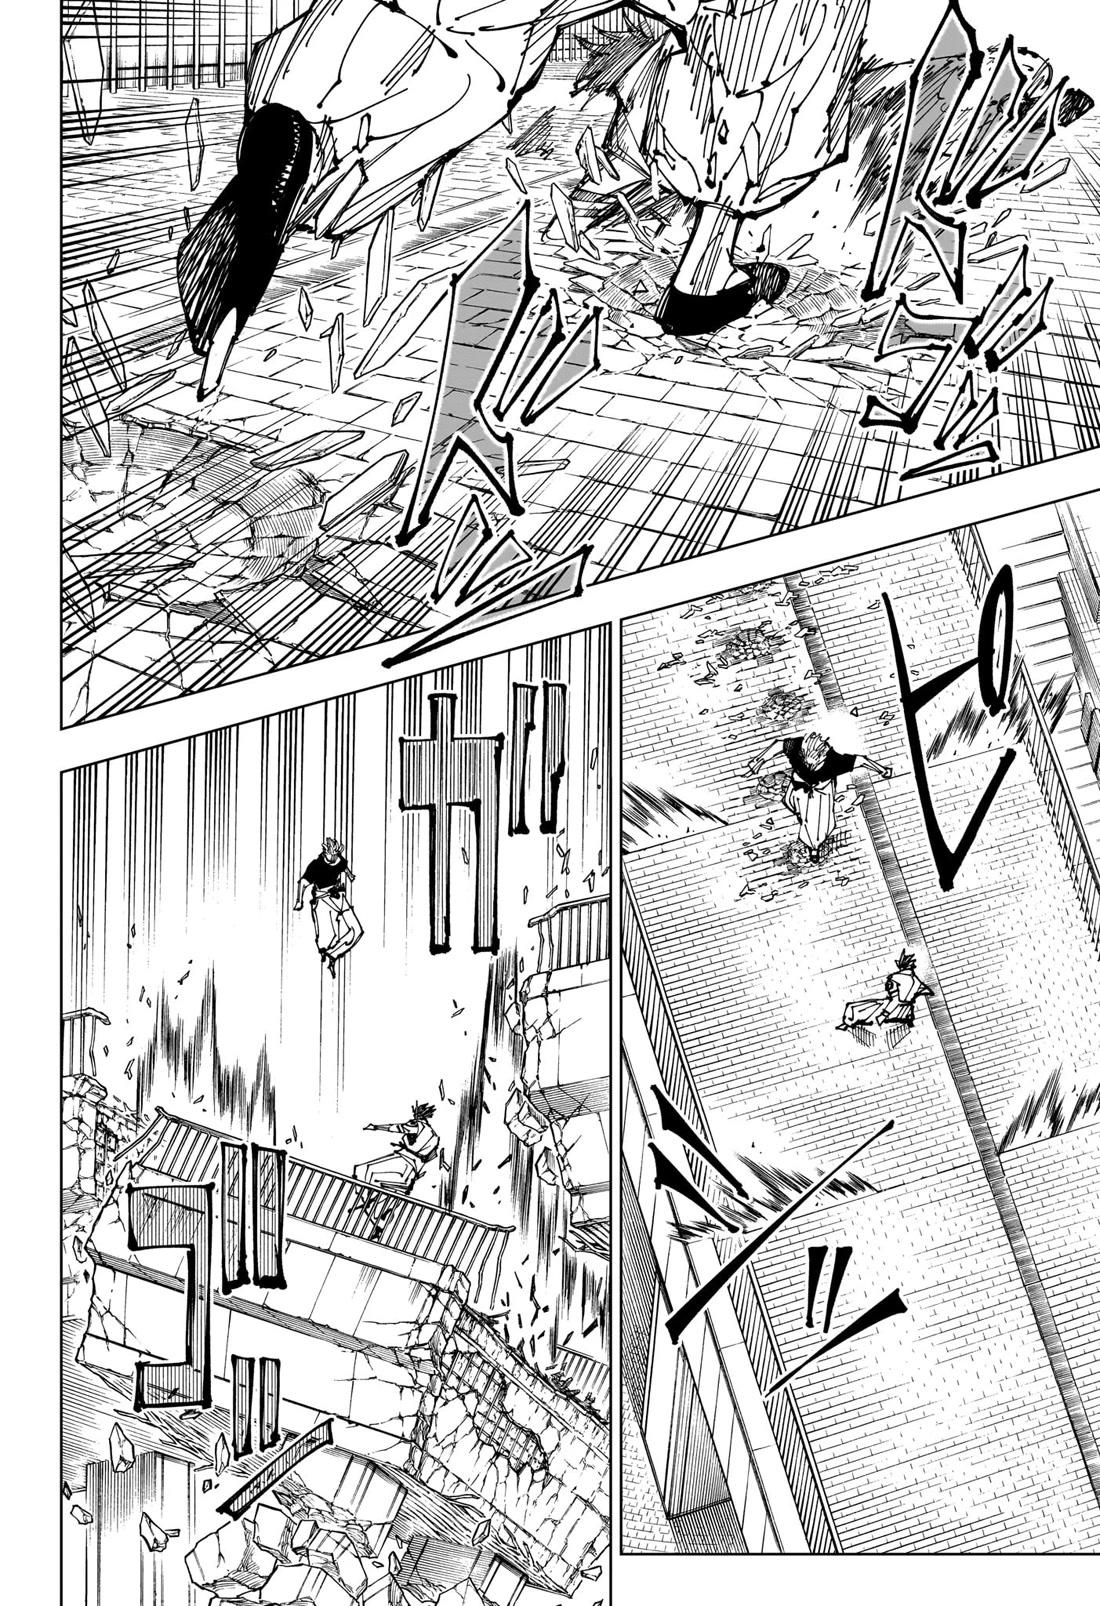 Jujutsu Kaisen Chapter 224: The Decisive Battle In The Uninhabited, Demon-Infested Shinjuku ② page 9 - Mangakakalot